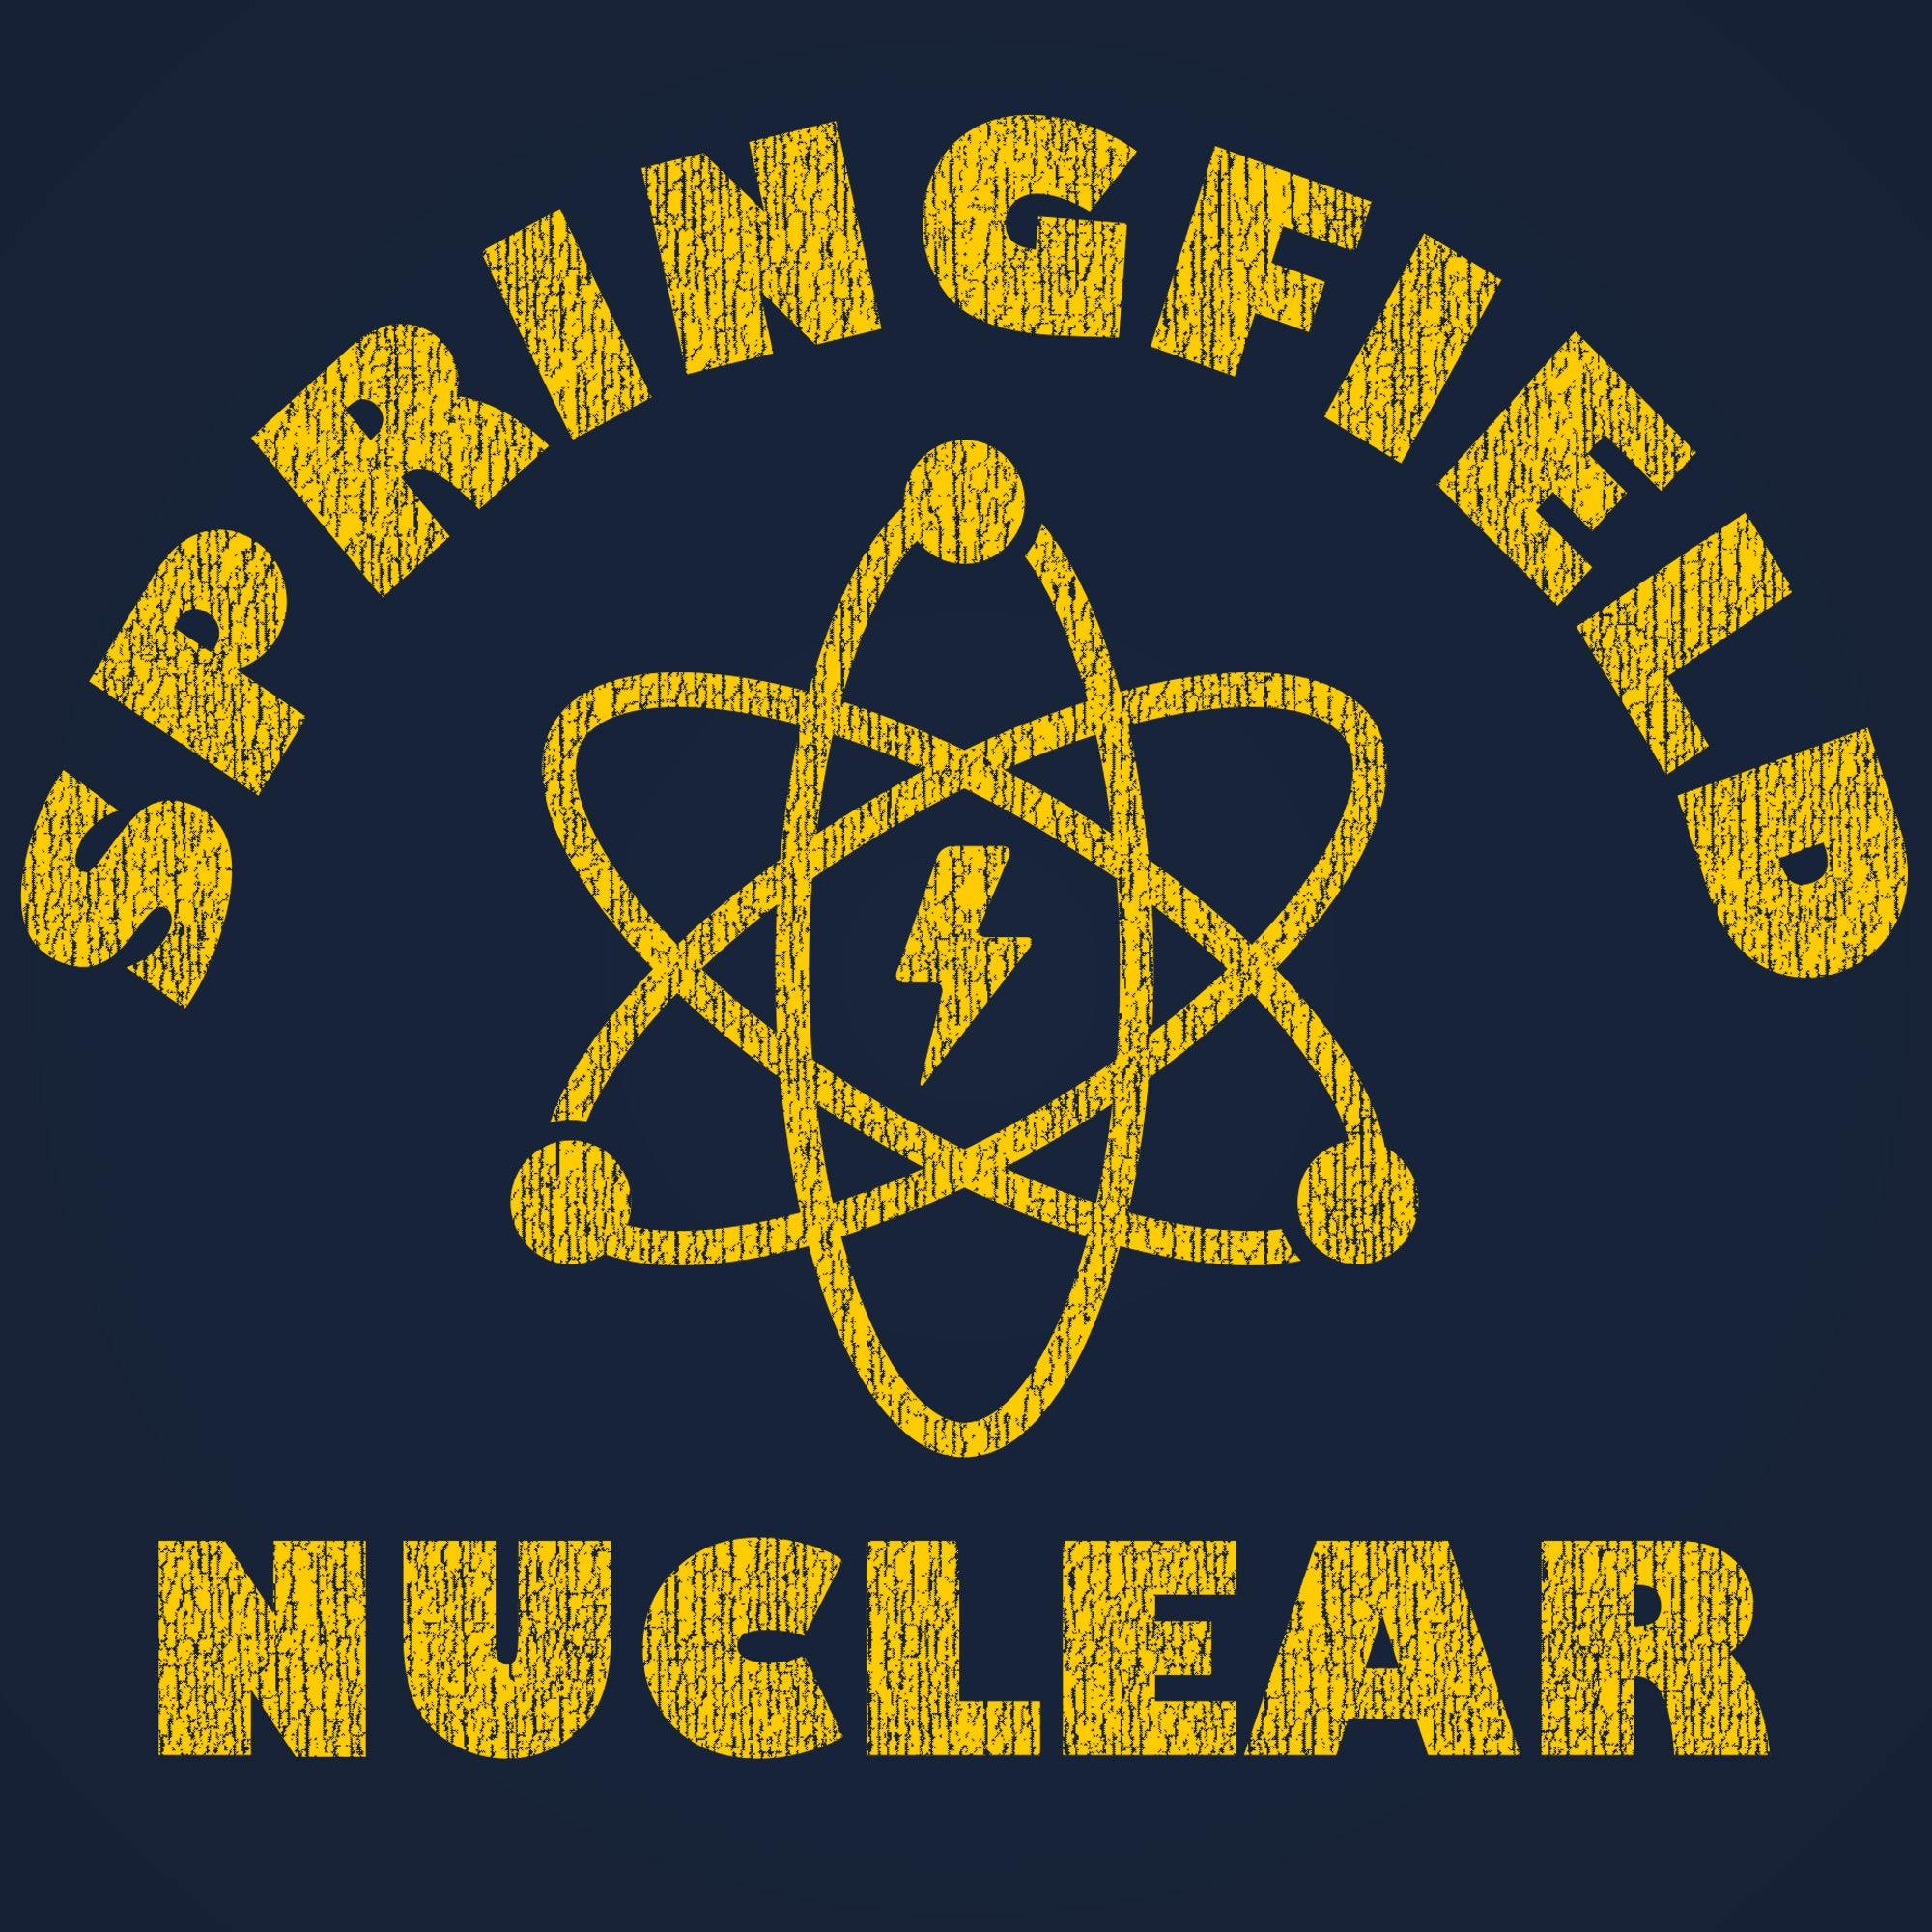 Springfield Nuclear